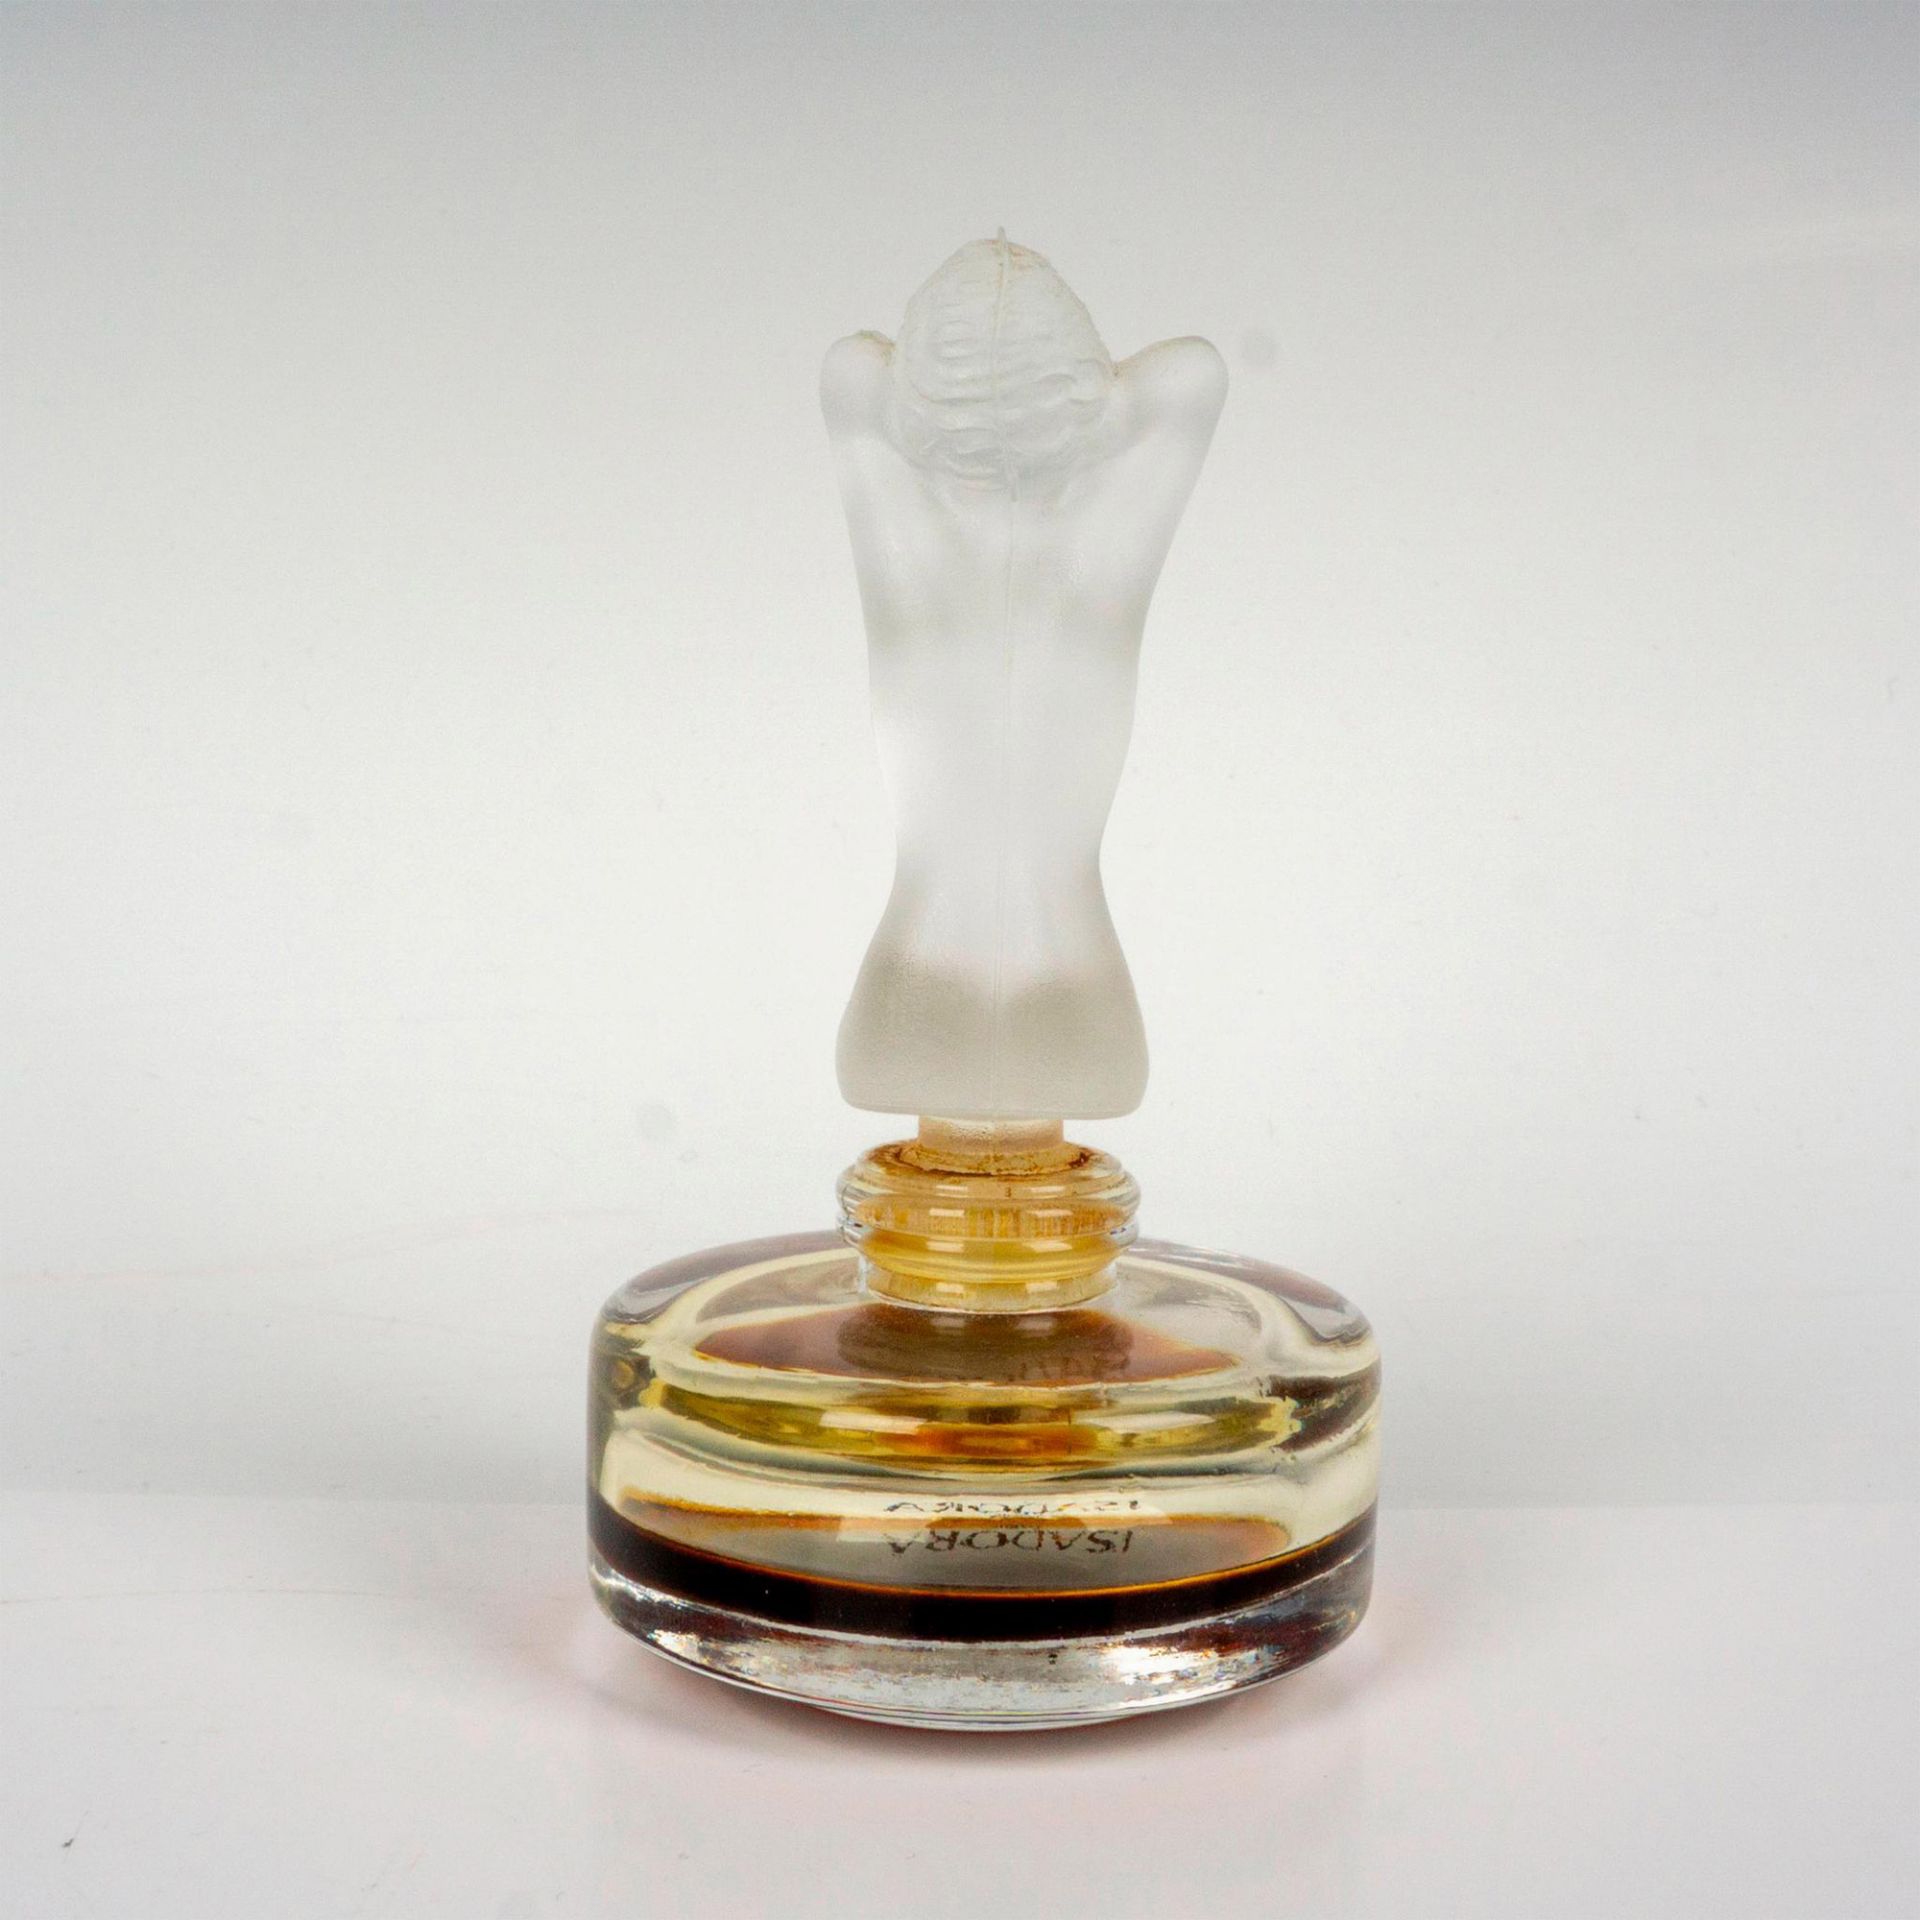 Pierre Dinard Isadora Perfume Bottle - Image 2 of 3